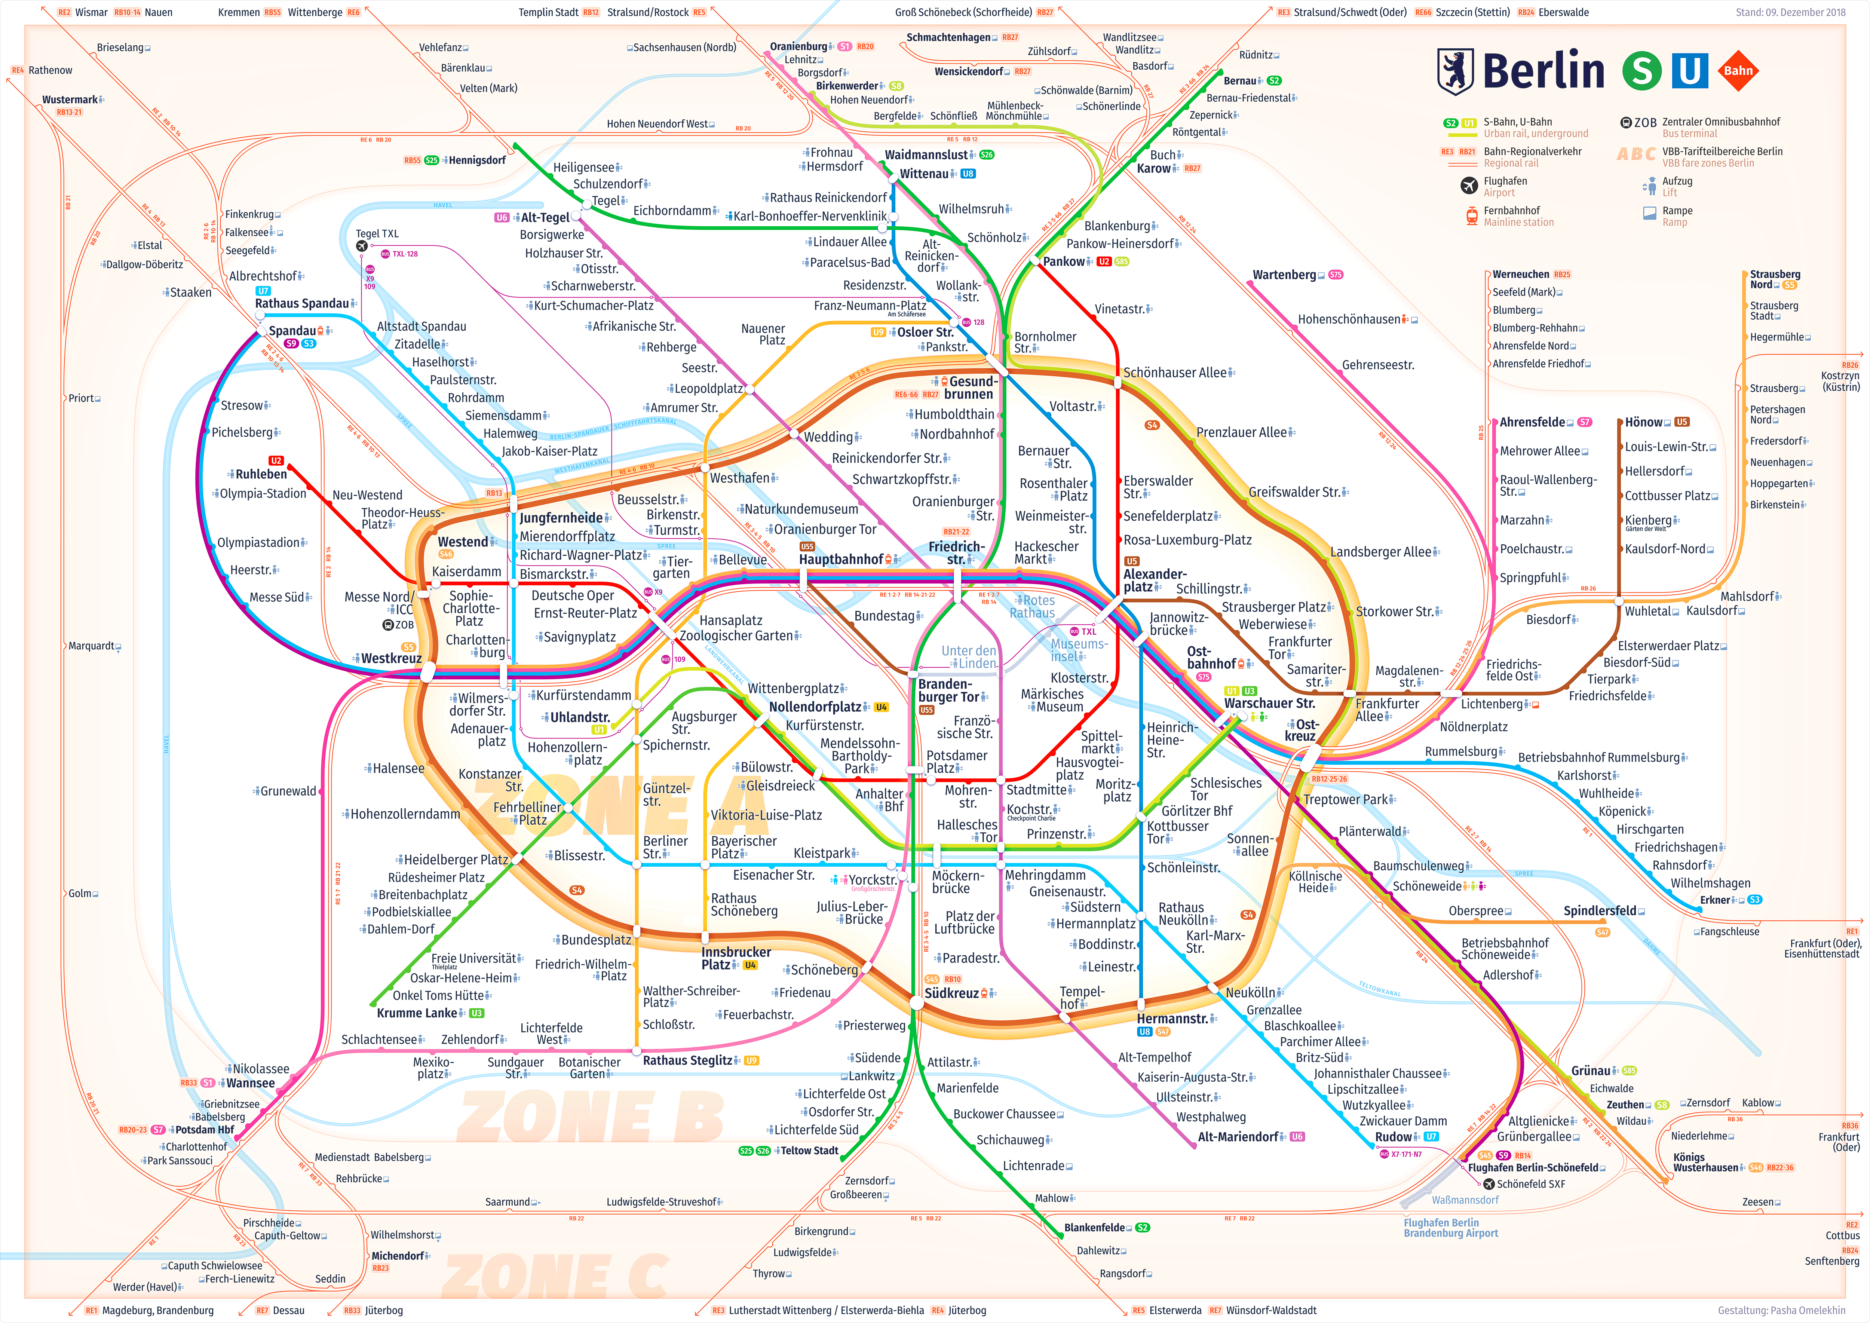 Berlin Rapid Transit Route Map 2018 1870x1323 